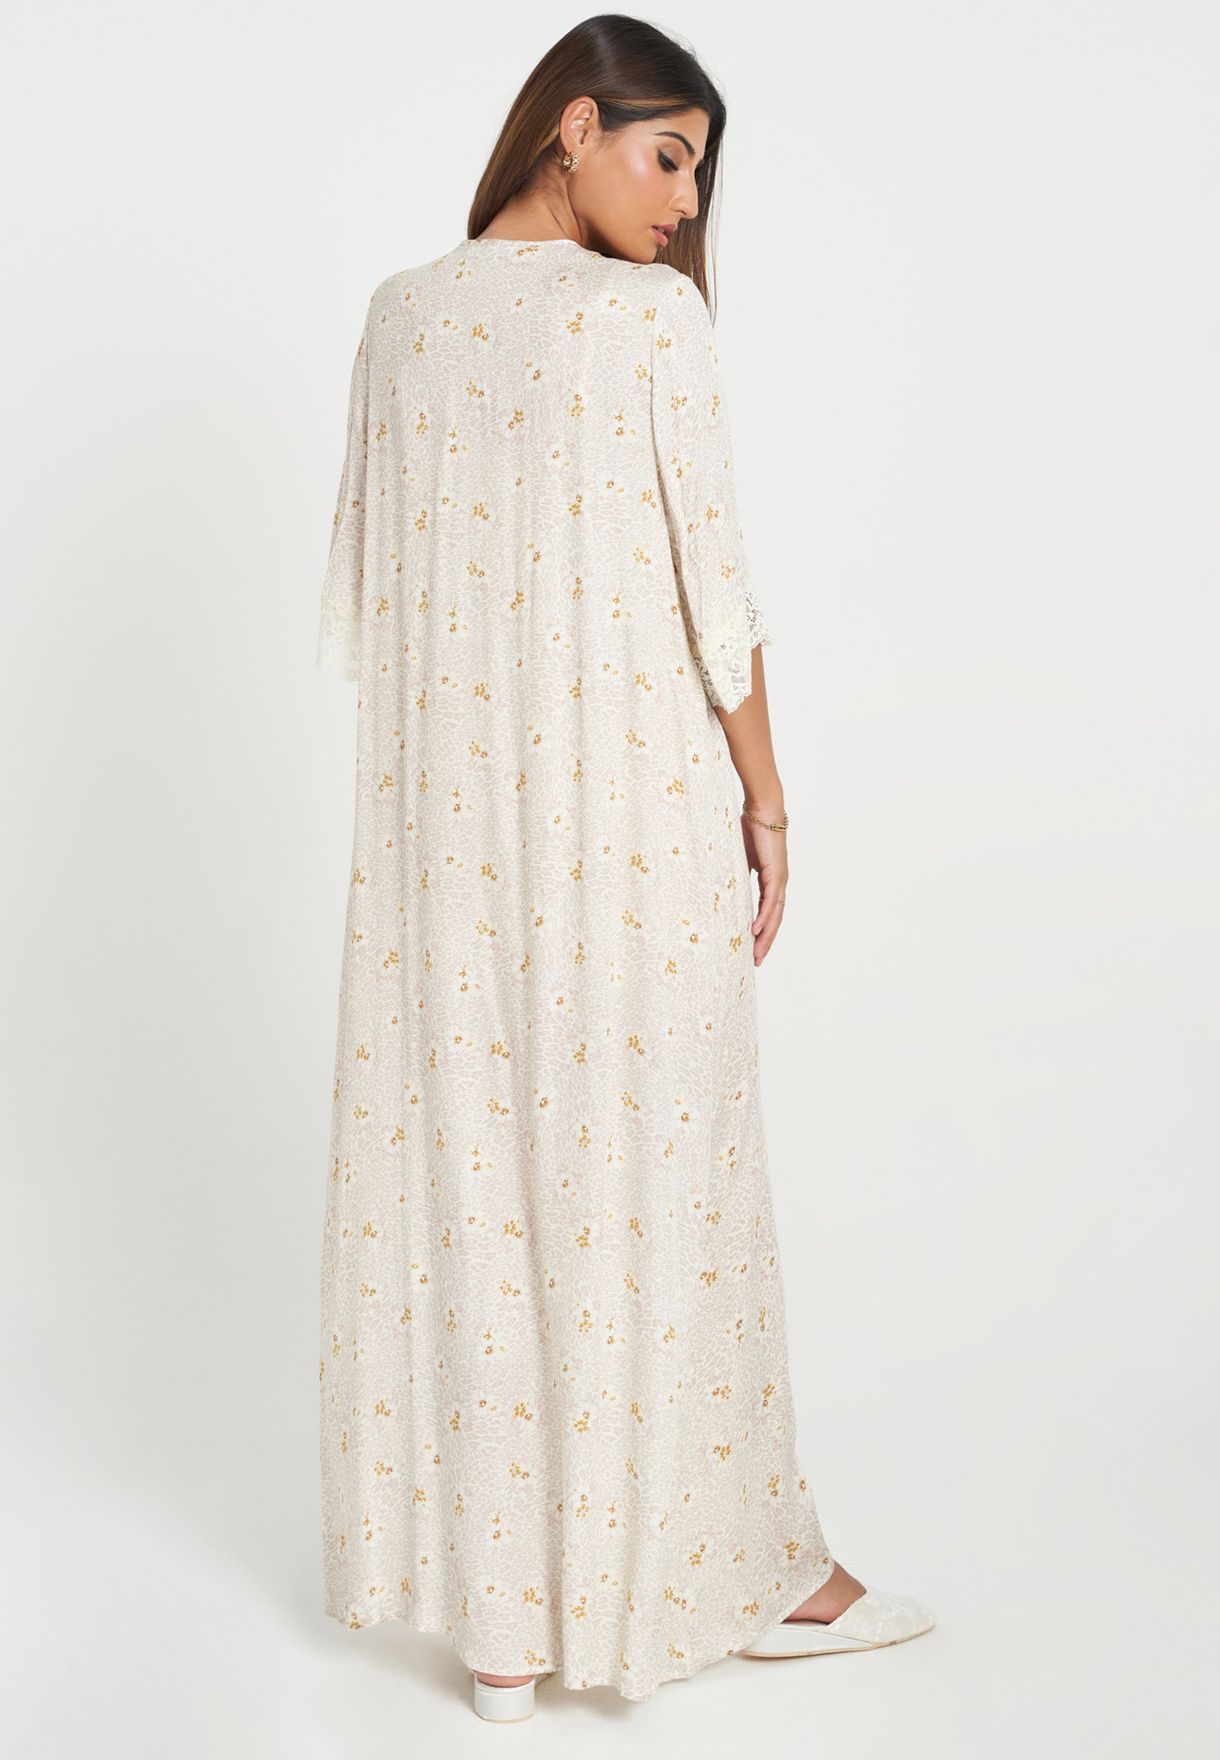 Lace Detail Printed Nightdress